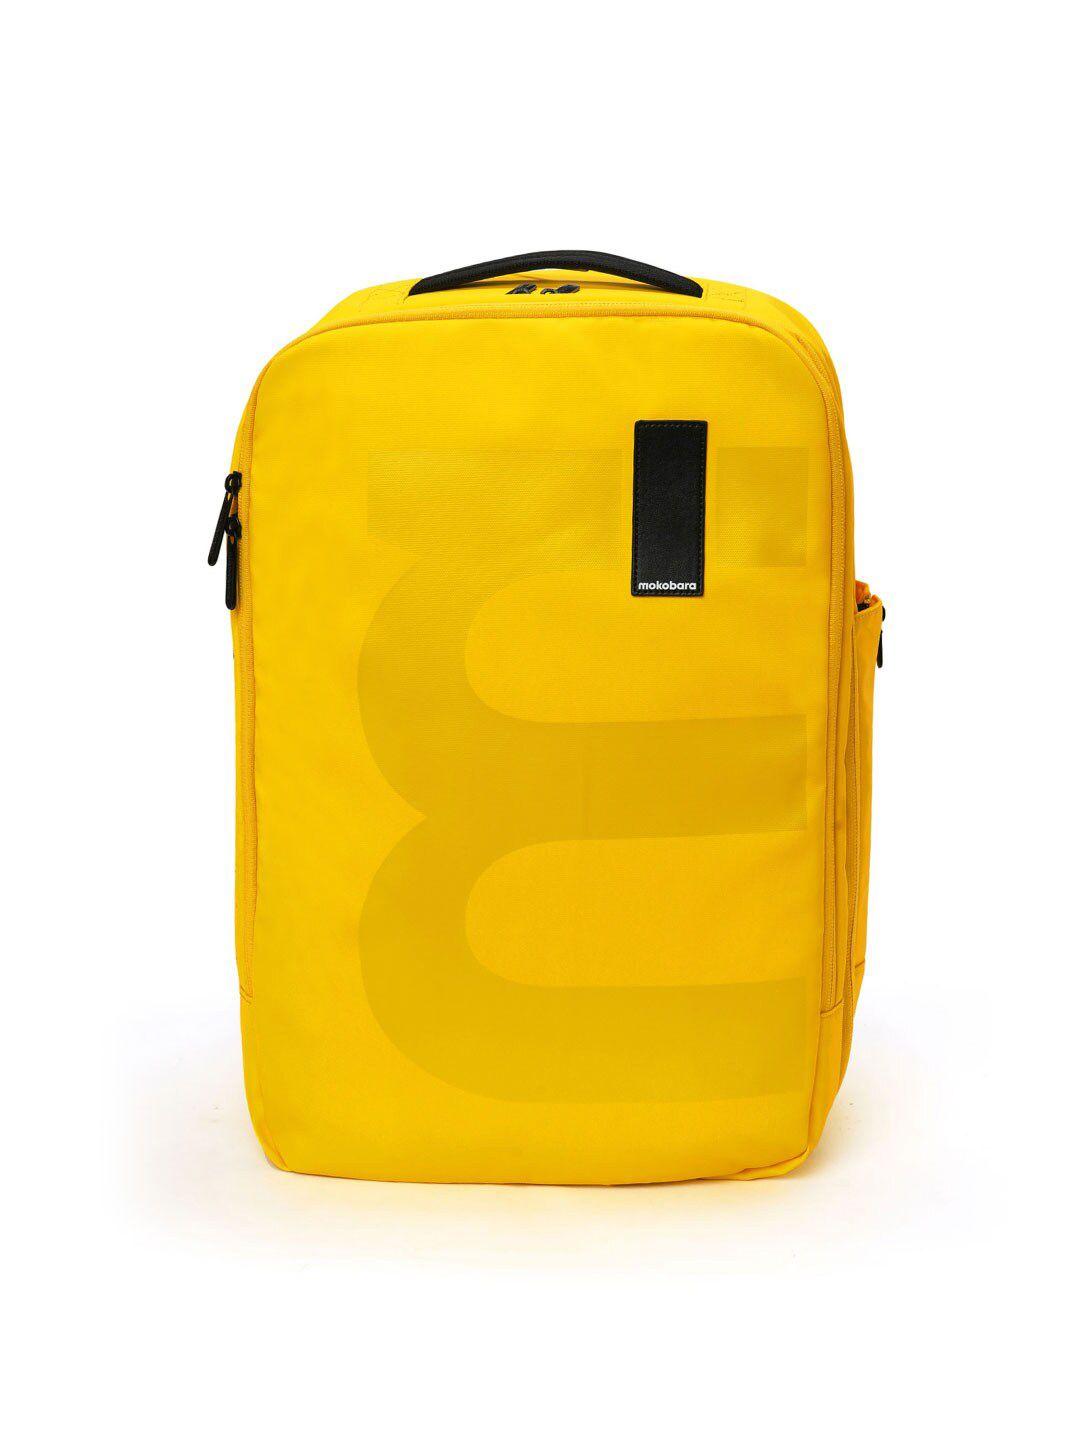 mokobara unisex contrast detail 16 inch laptop backpack